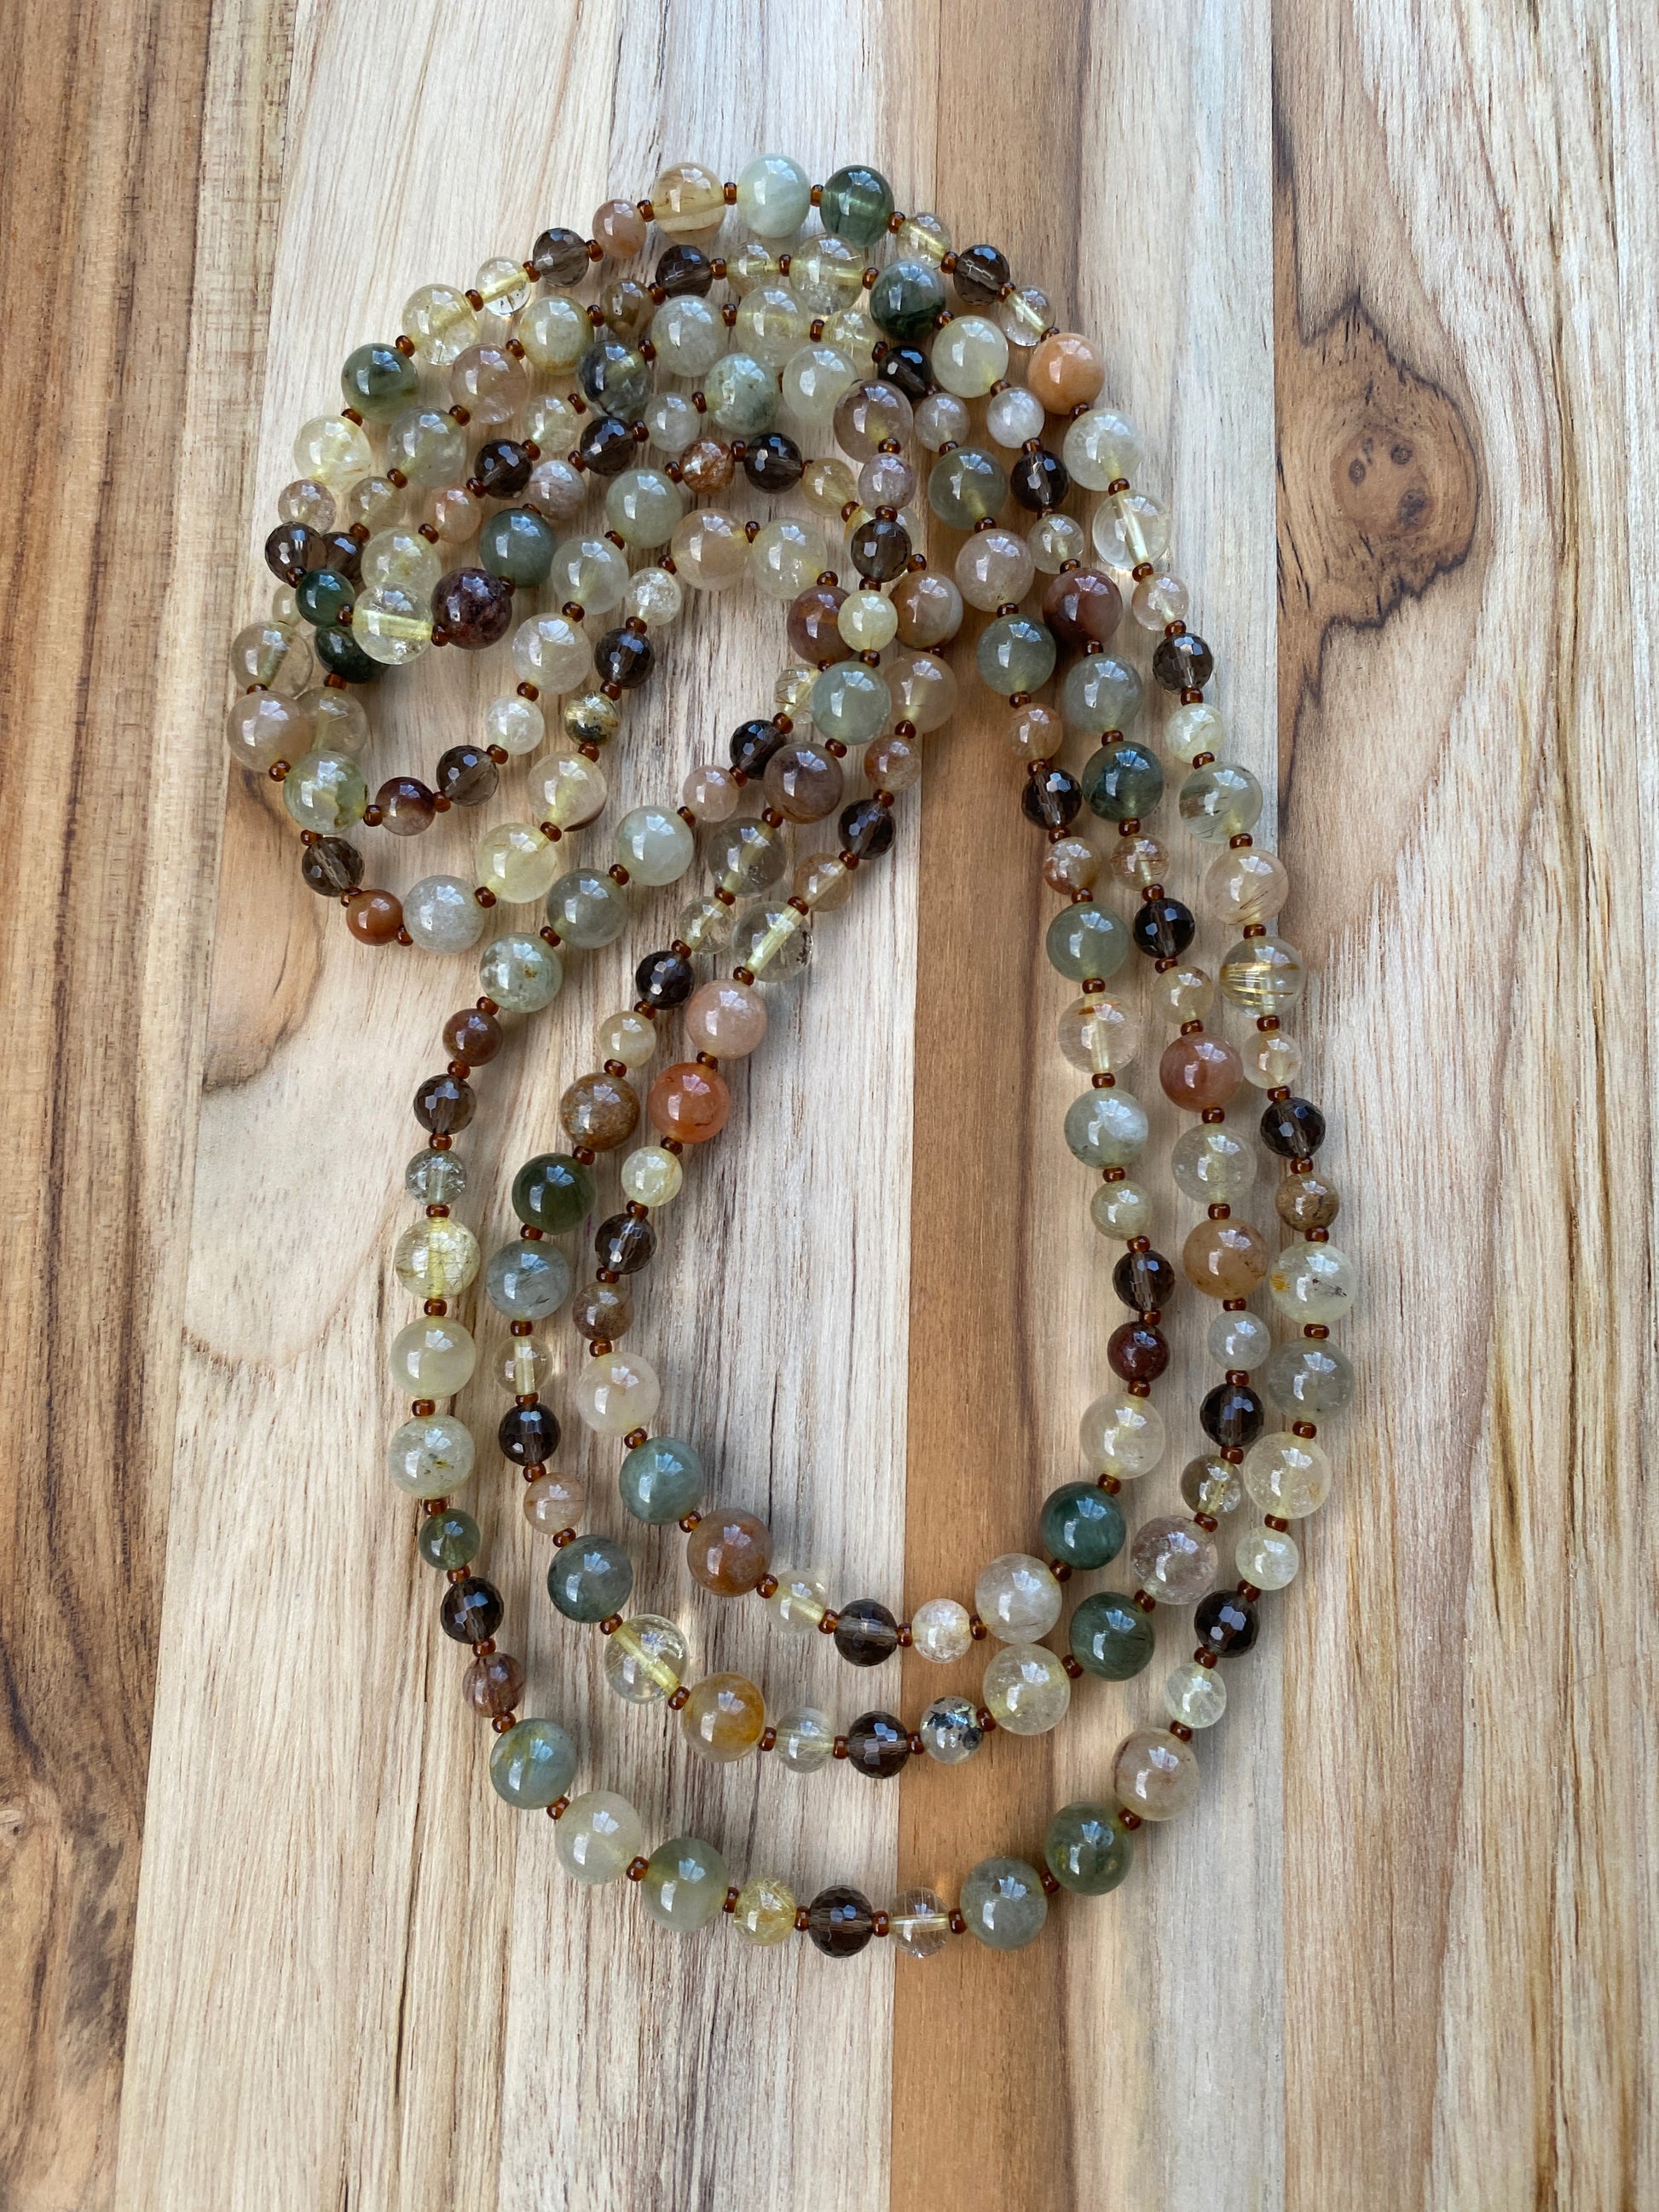 60" Extra Long Wraparound Style Mixed Rutilated Quartz Beaded Necklace with Smokey Quartz Beads - My Urban Gems